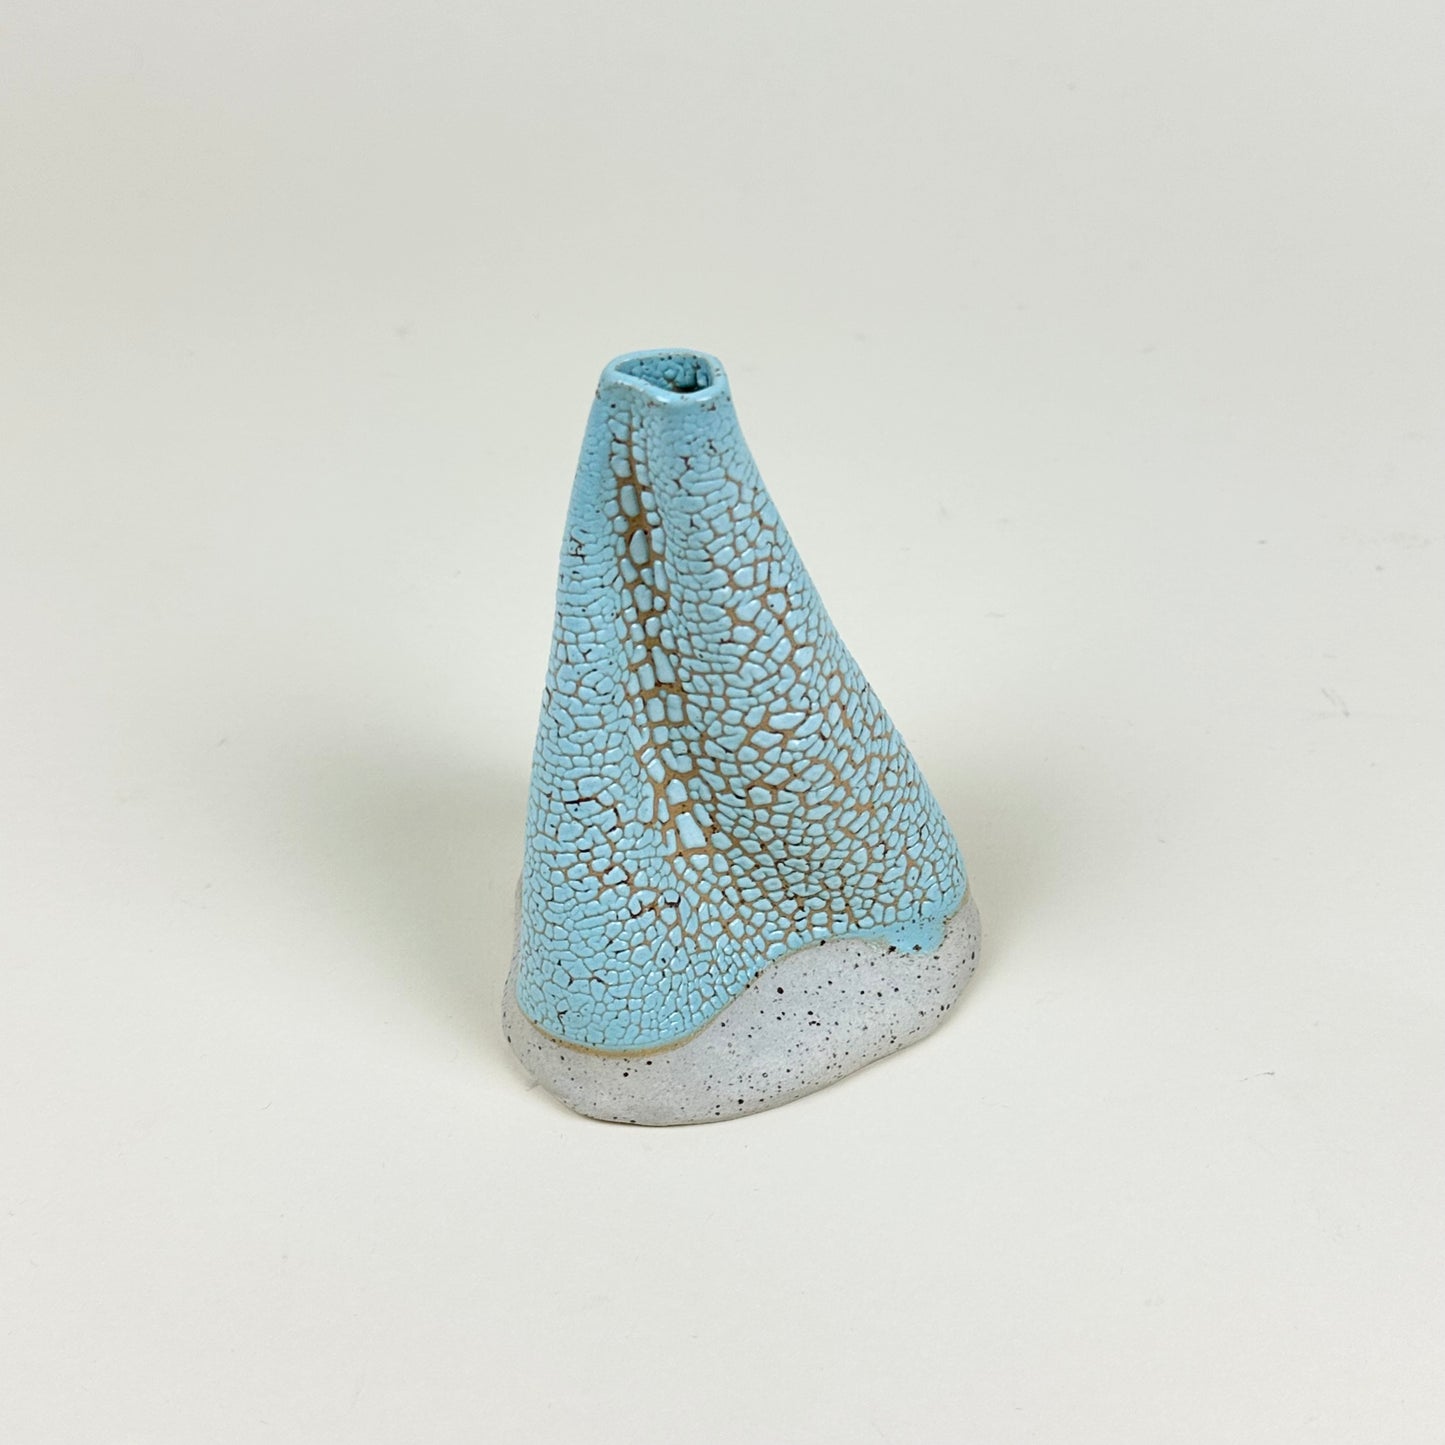 Light blue yellow volcano vase (L) by Astrid Öhman.